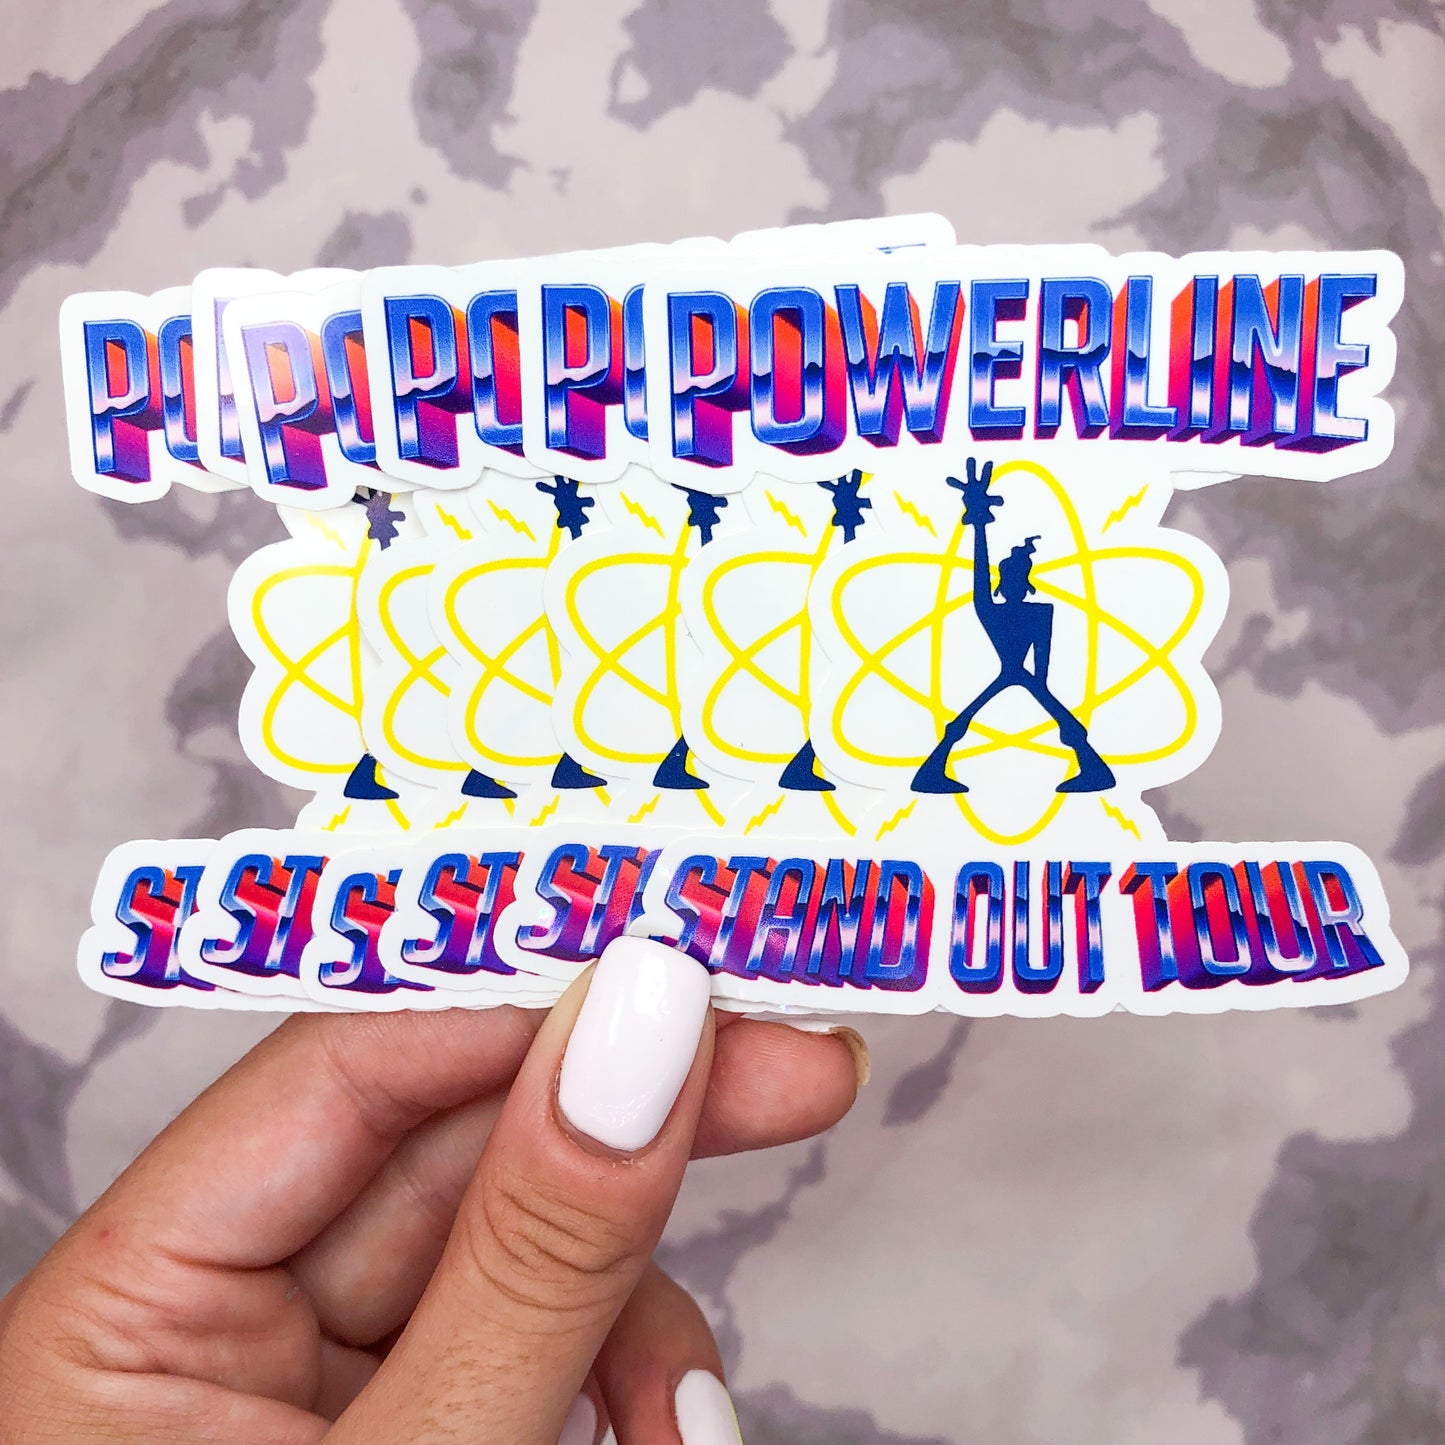 Powerline Stand Out Tour Goofy Movie Sticker